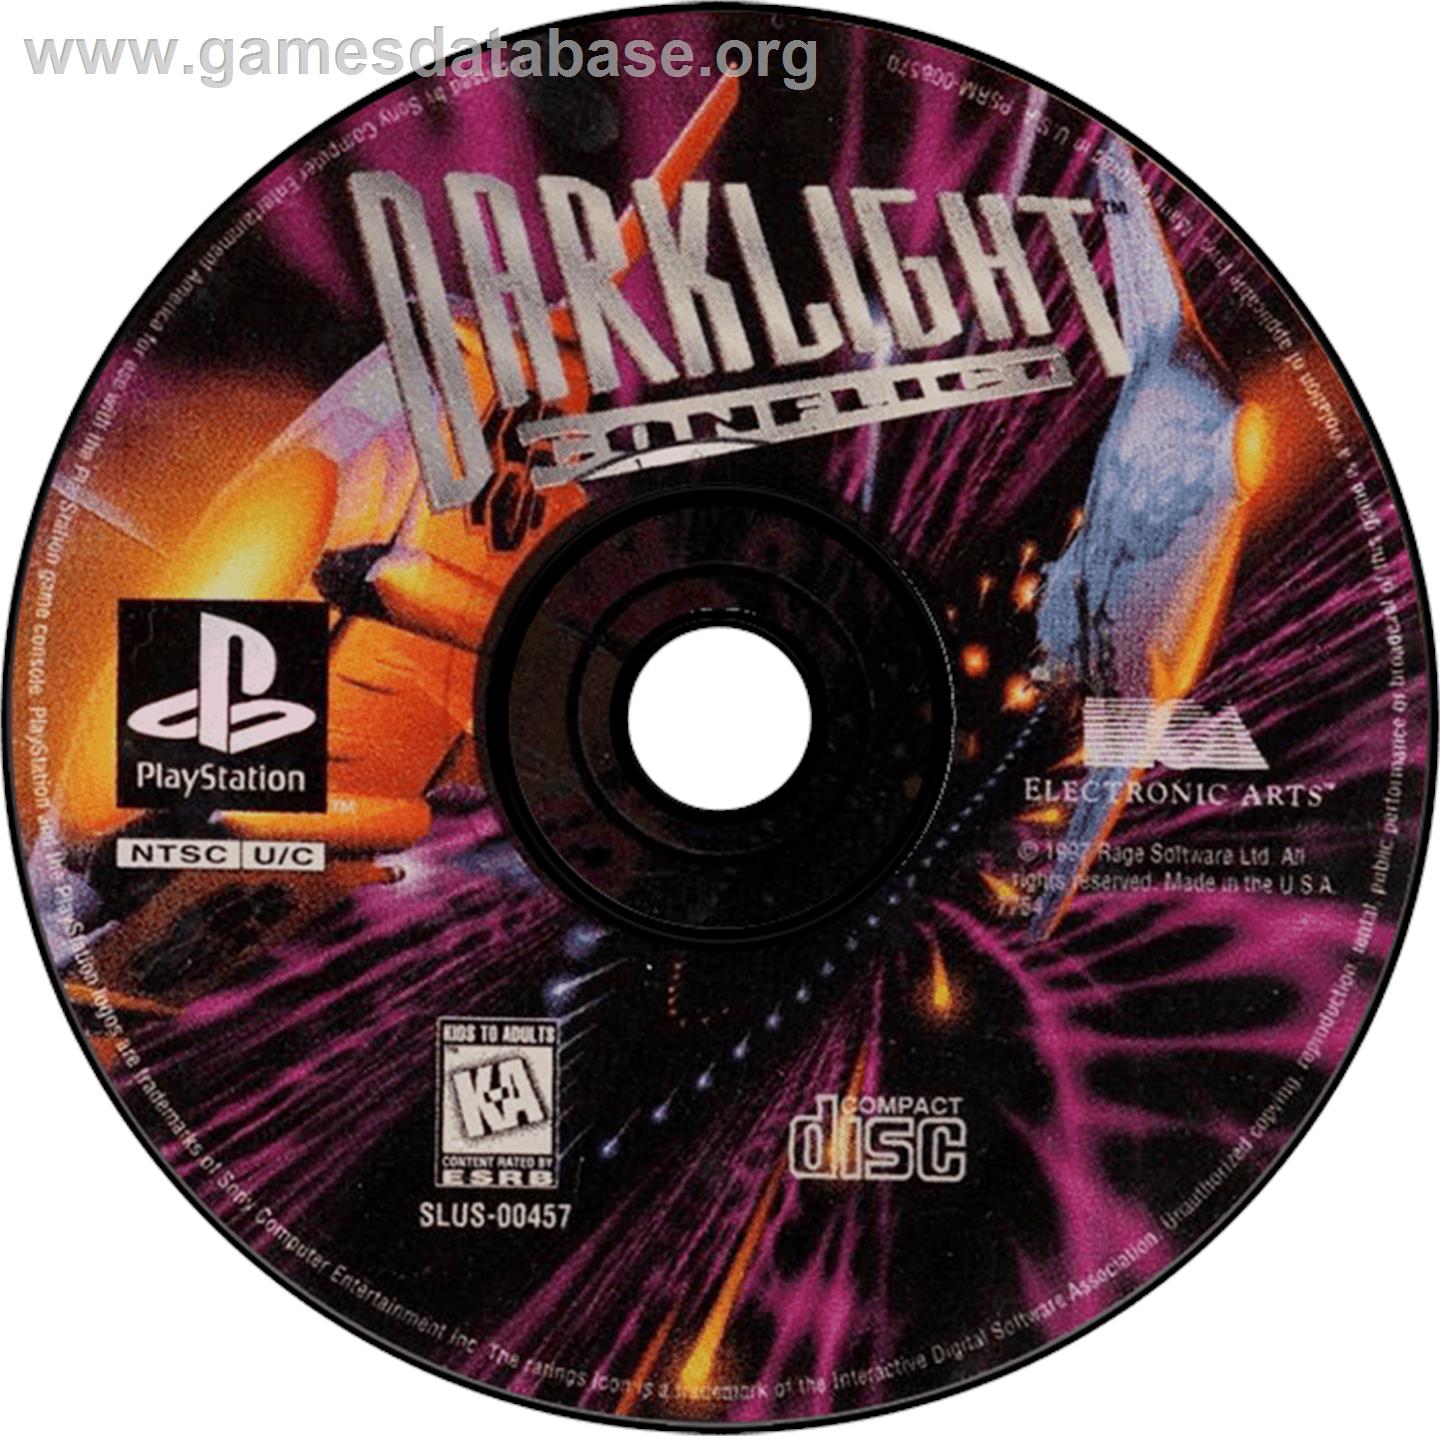 Darklight Conflict - Sony Playstation - Artwork - Disc